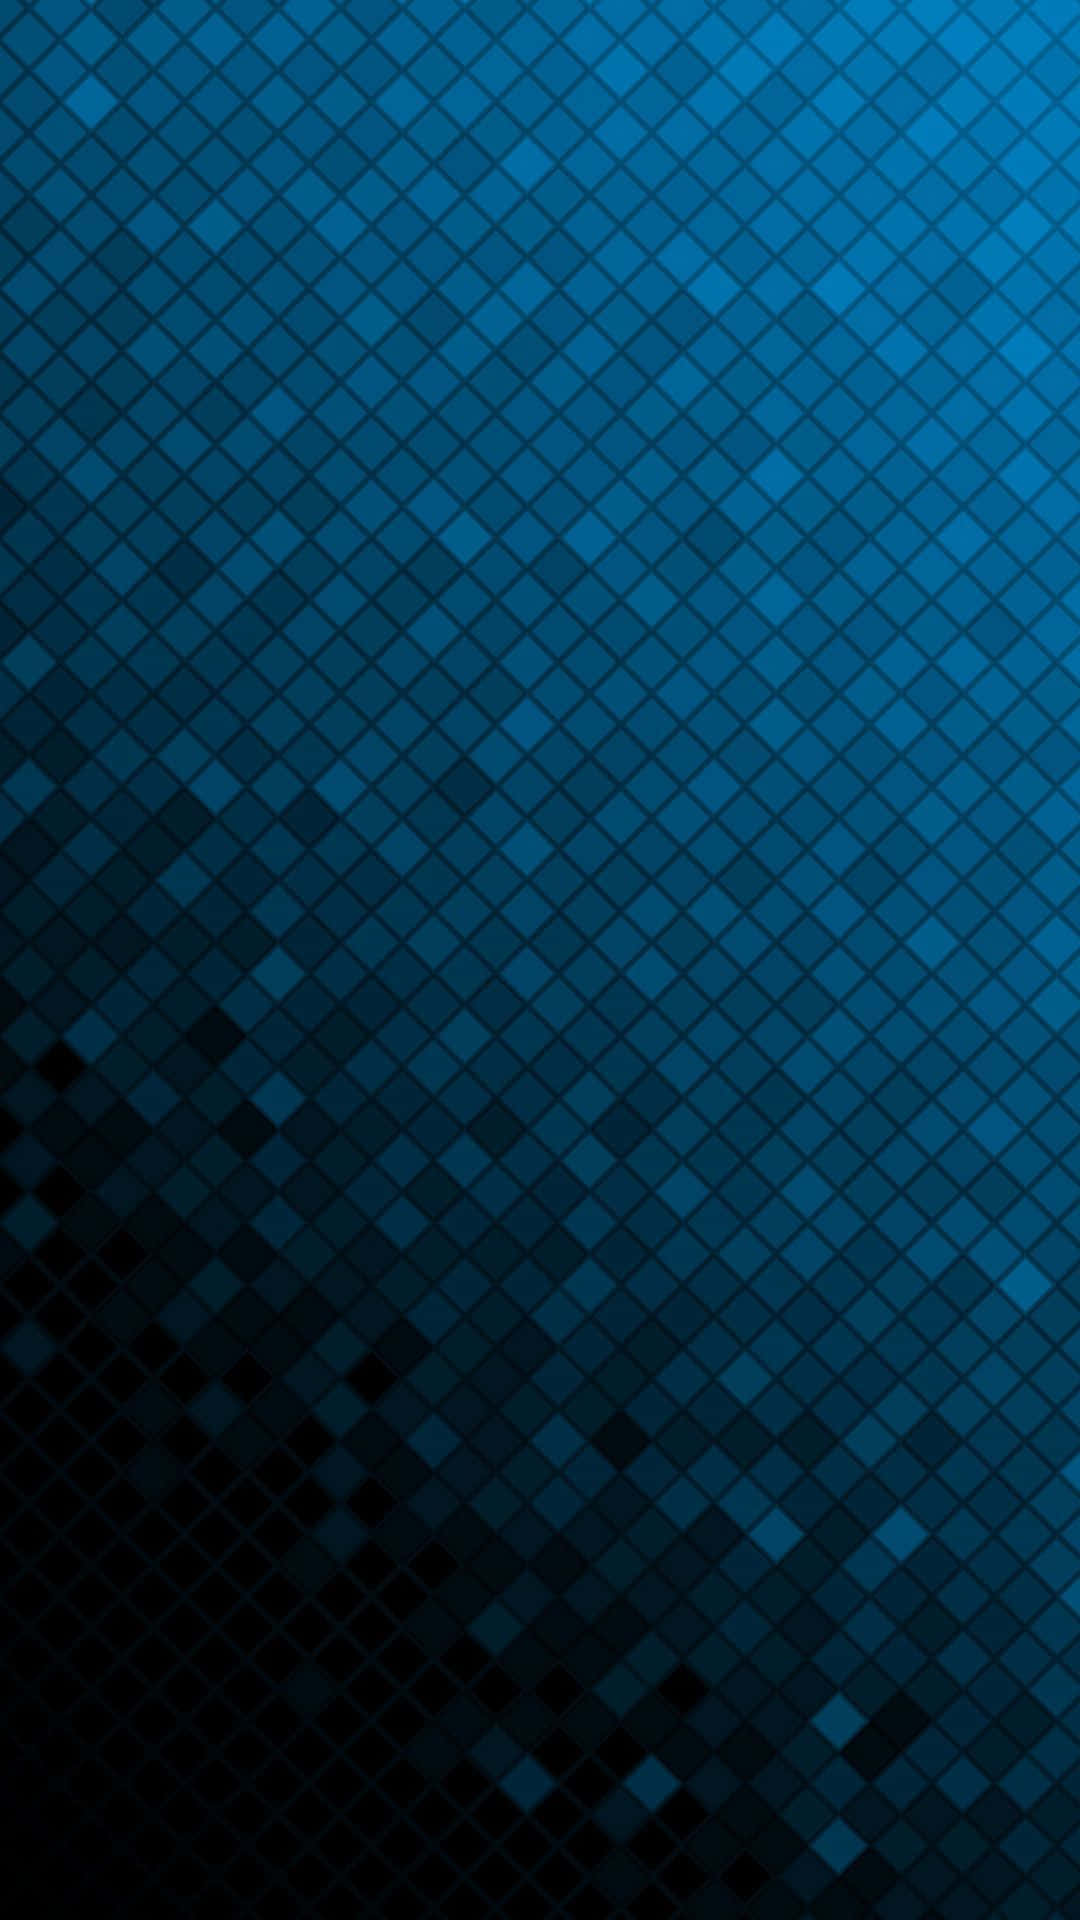 Galaxy S5 Blue Gradient Tiles Background